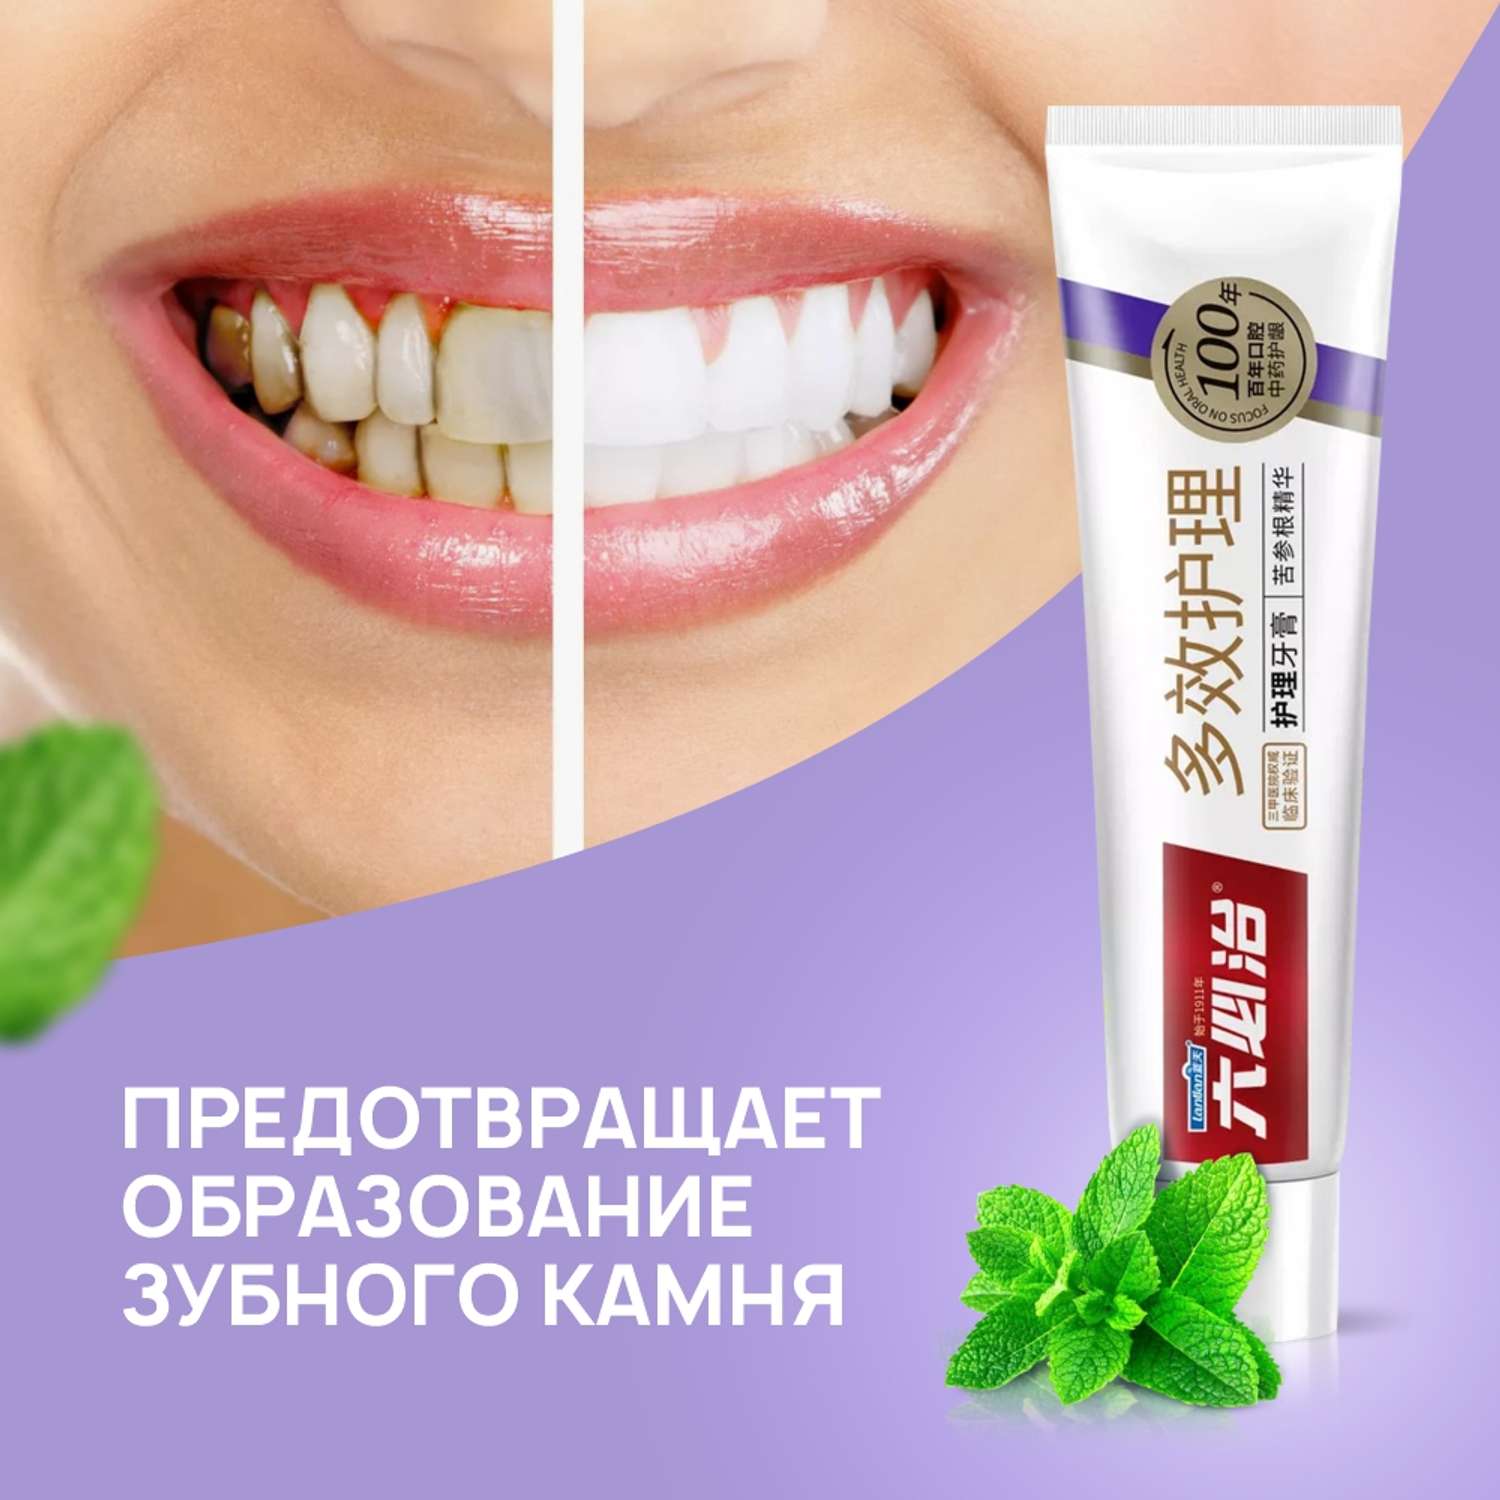 Зубная паста Liby multi effect care освежающая мята fluoride free 120 гр - фото 6